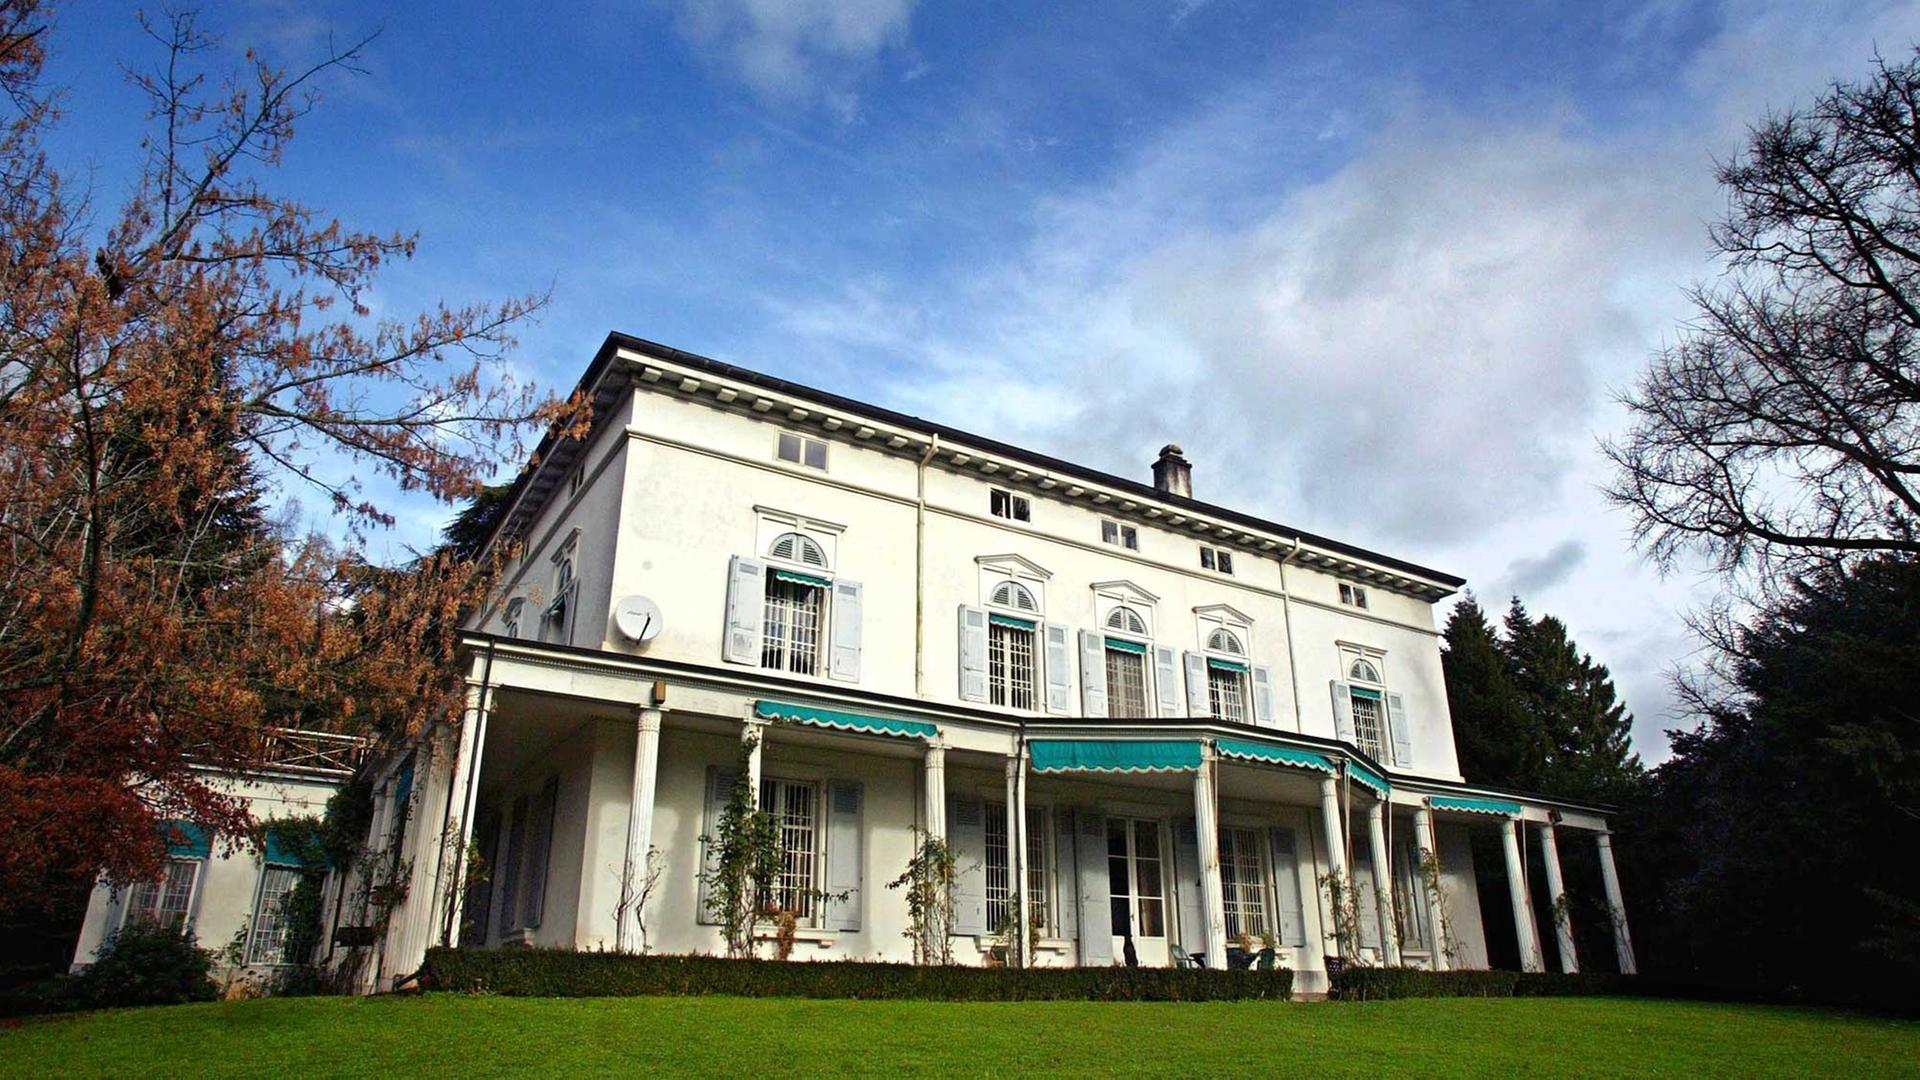 Chaplins Villa "Manoir de Ban" in Corsier-on-Vevey 